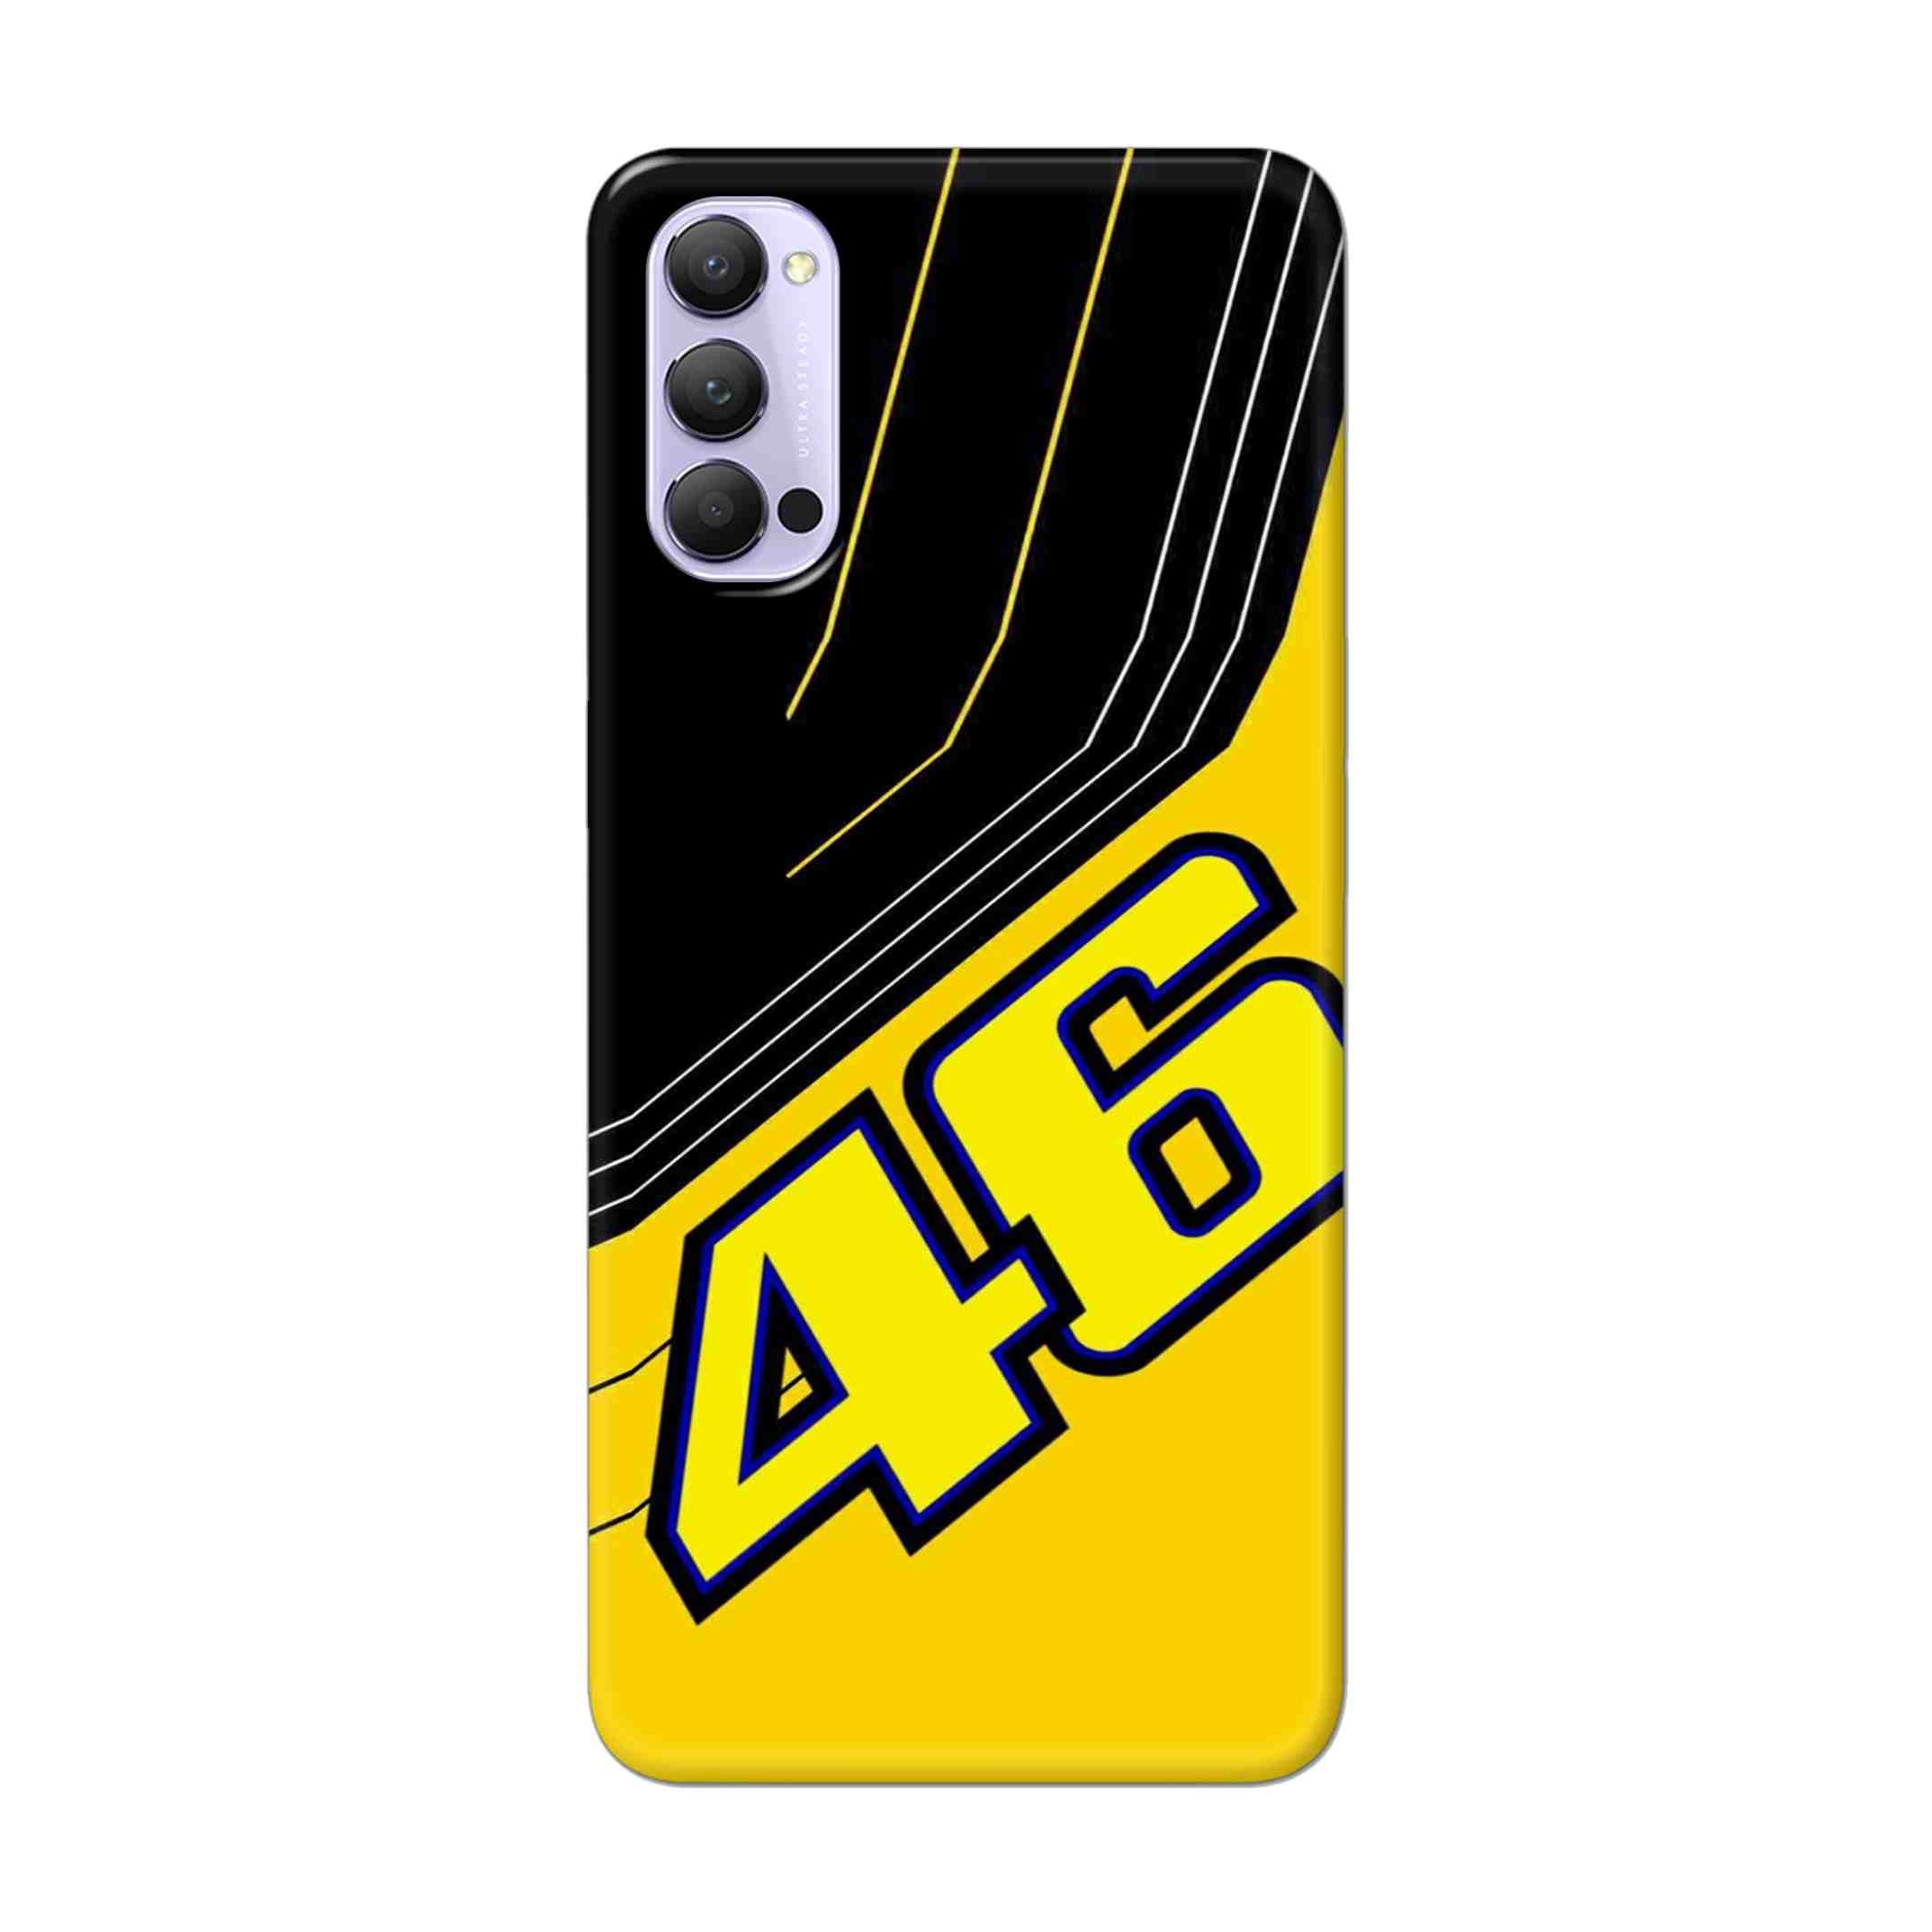 Buy 46 Hard Back Mobile Phone Case Cover For Oppo Reno 4 Pro Online